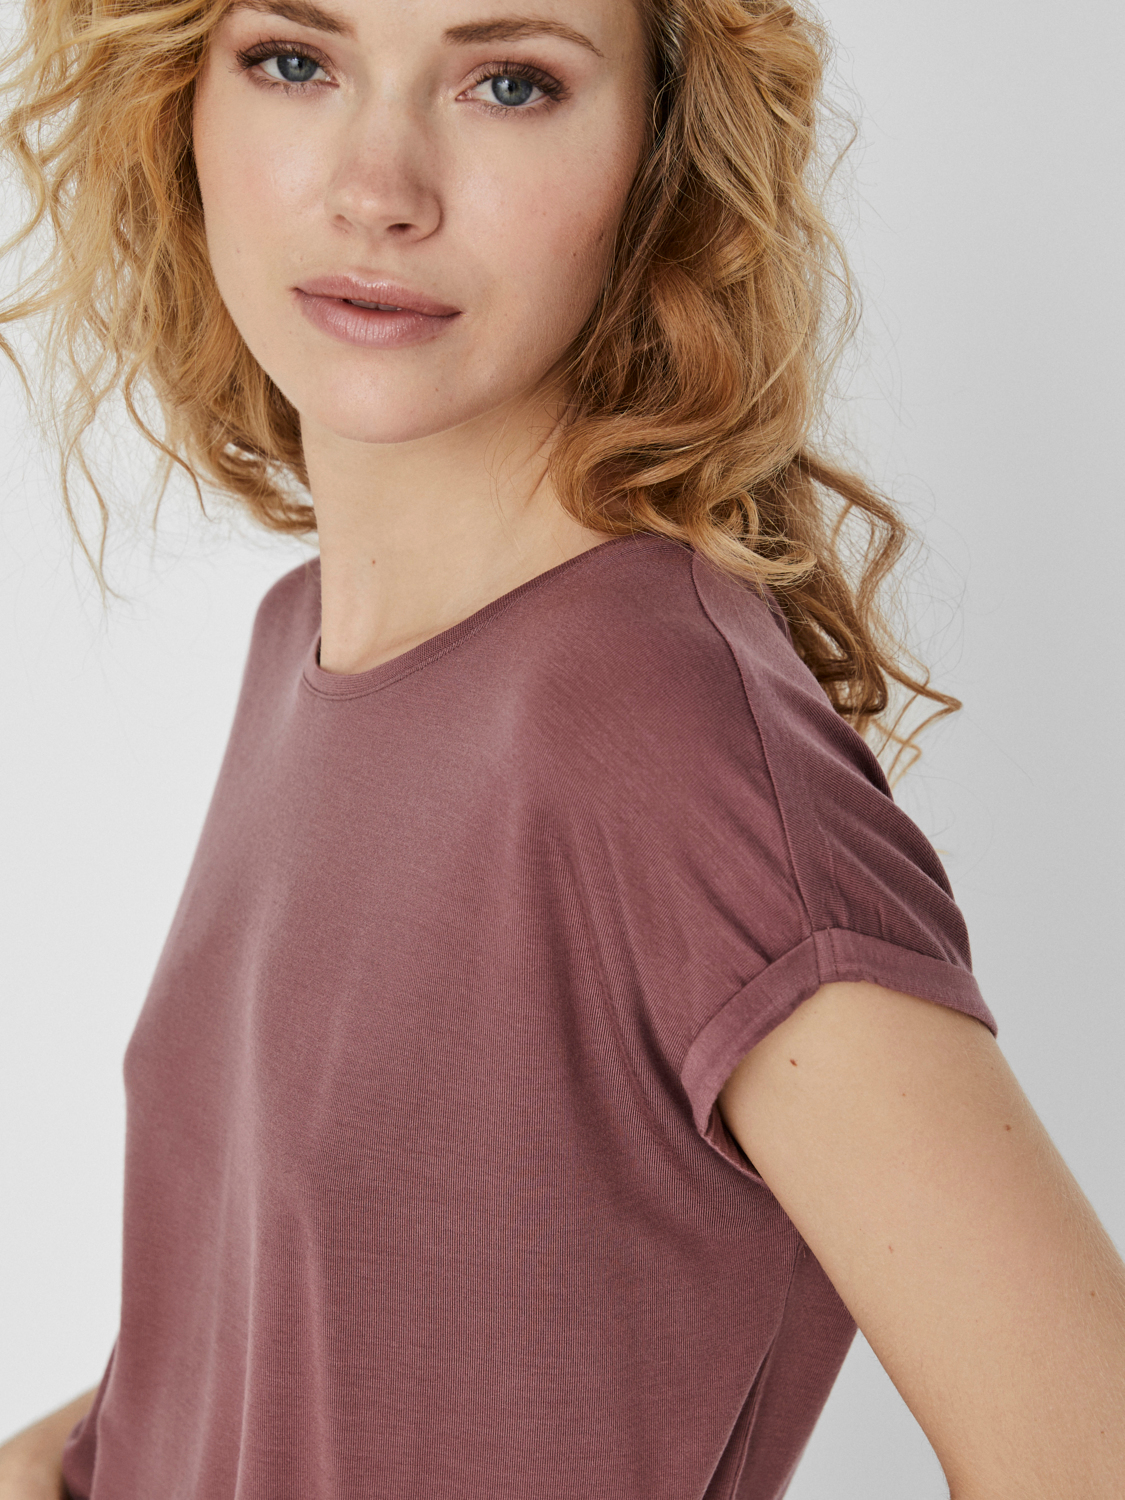 AWARE | Ava T-Shirt, ROSE BROWN, large